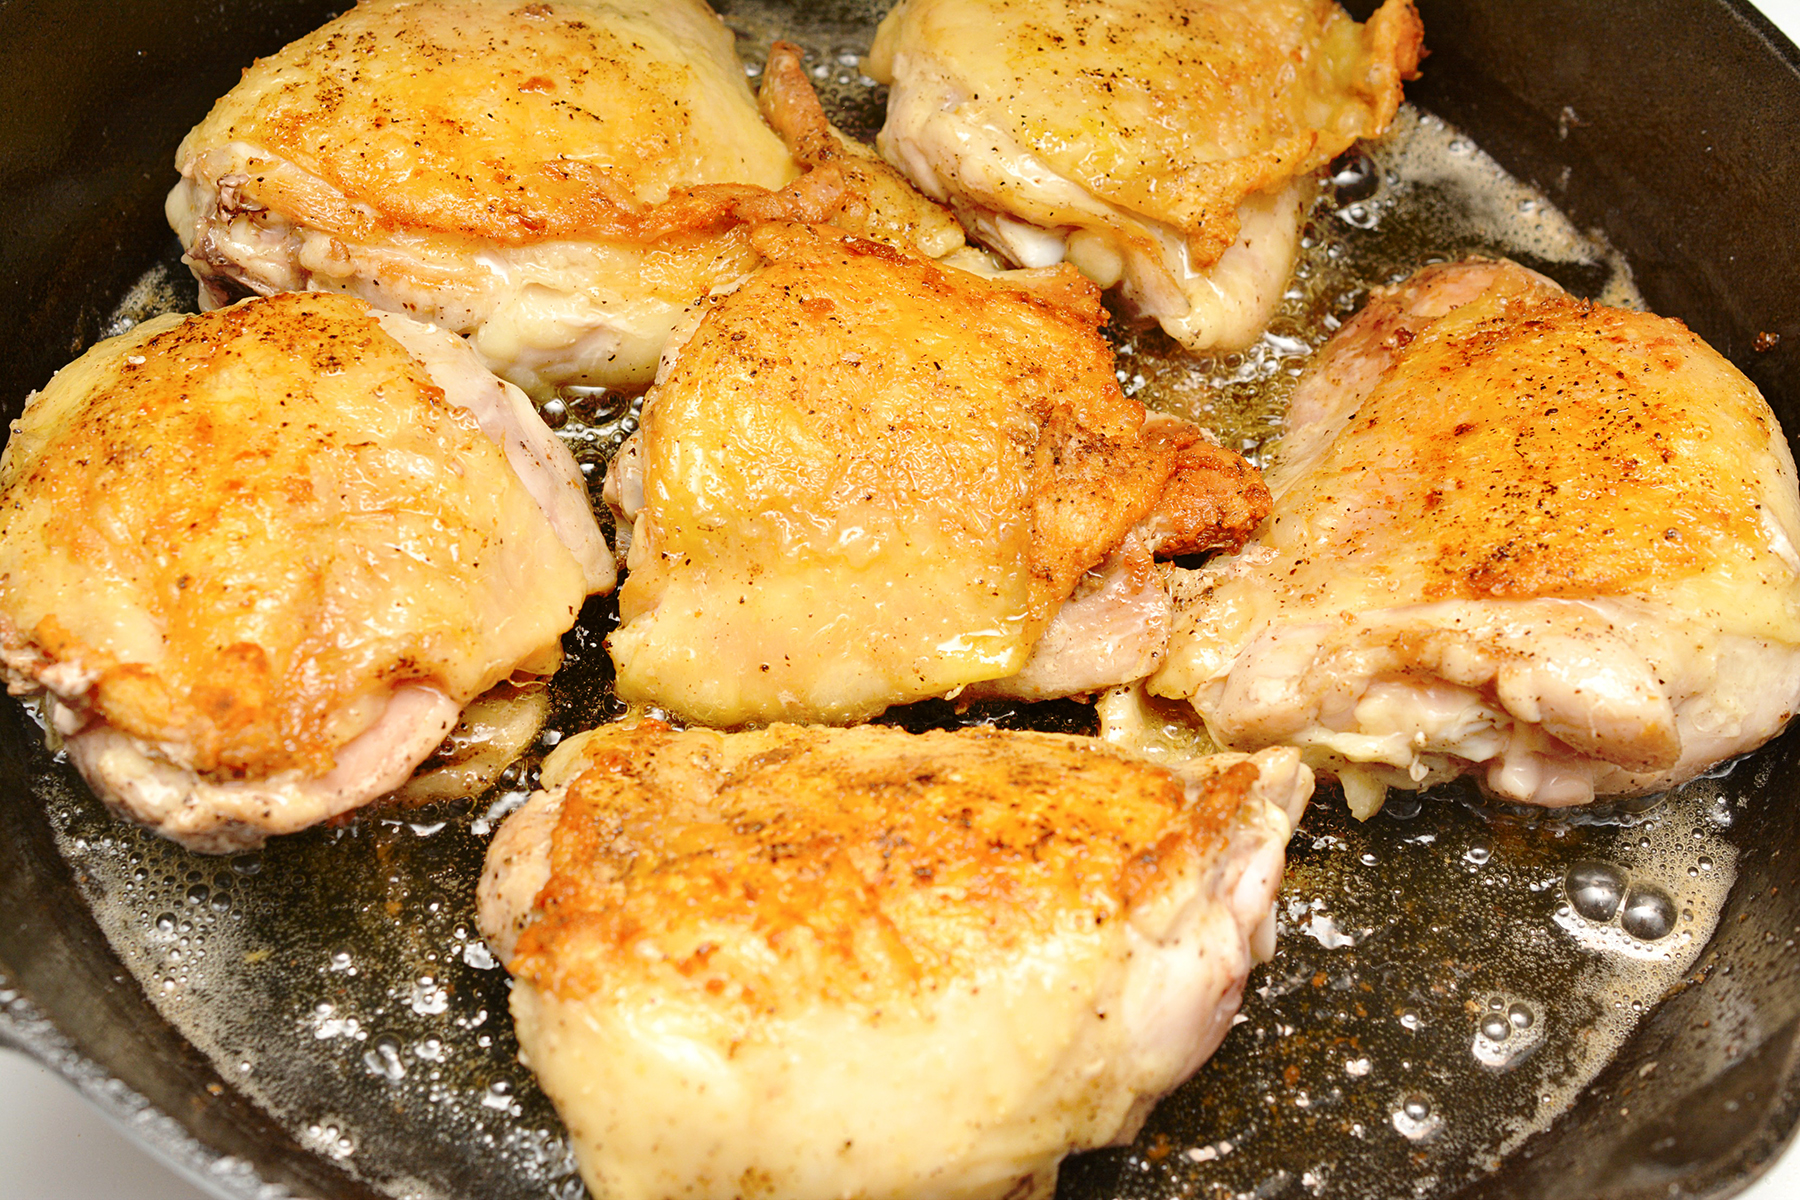 Keto Garlic Roasted Chicken Thighs with Parmesan Gravy